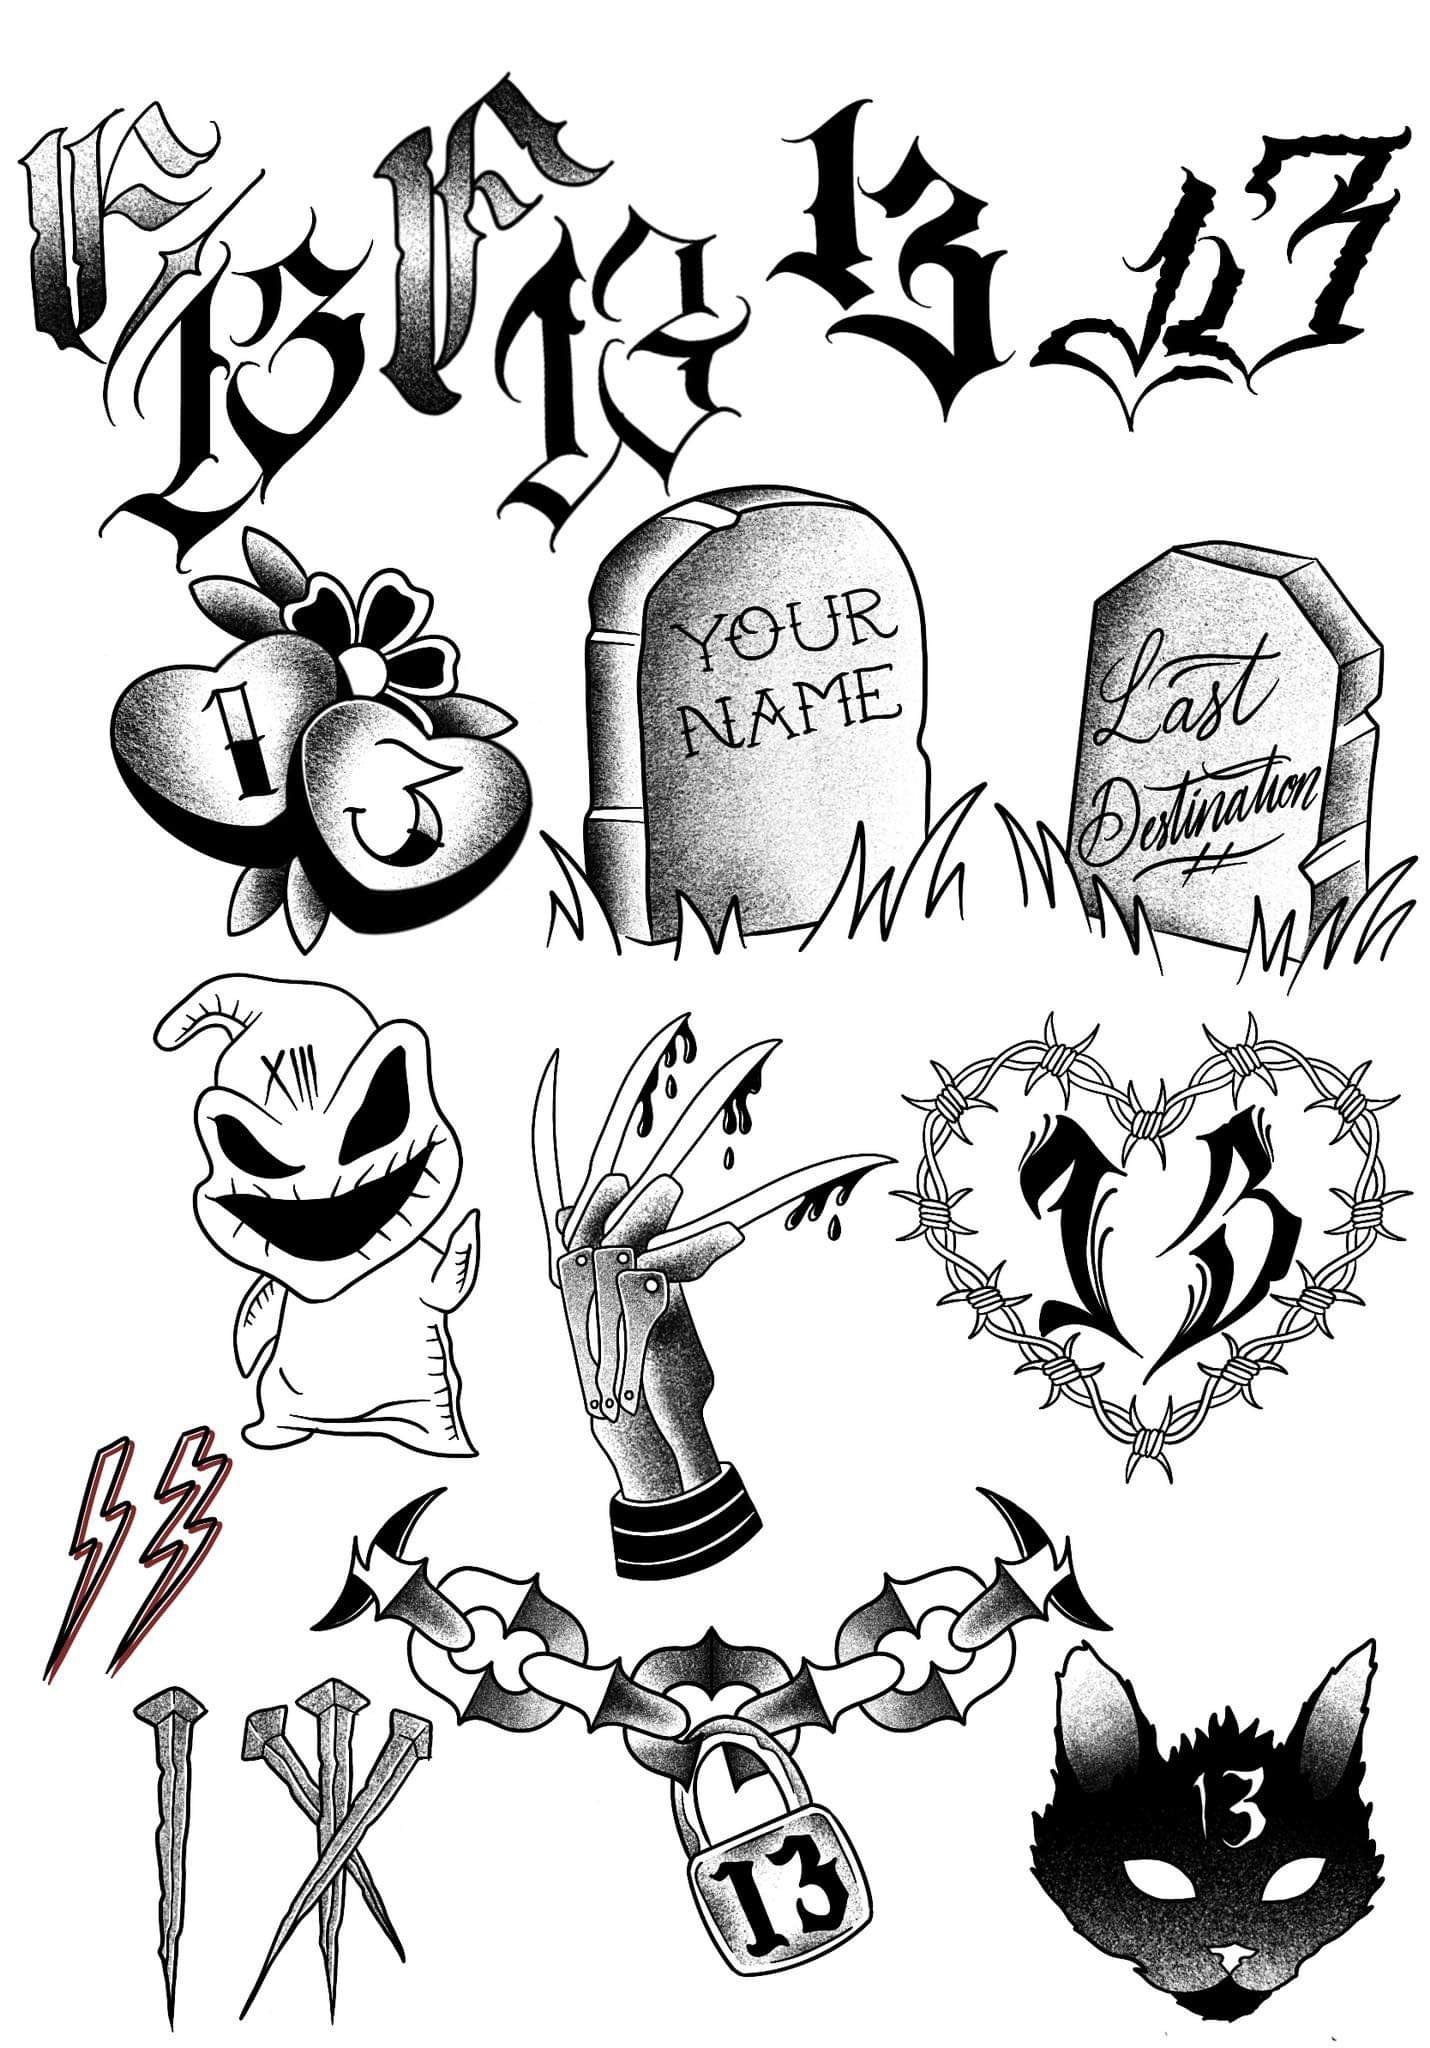 Halloween inspired designs by Eponk